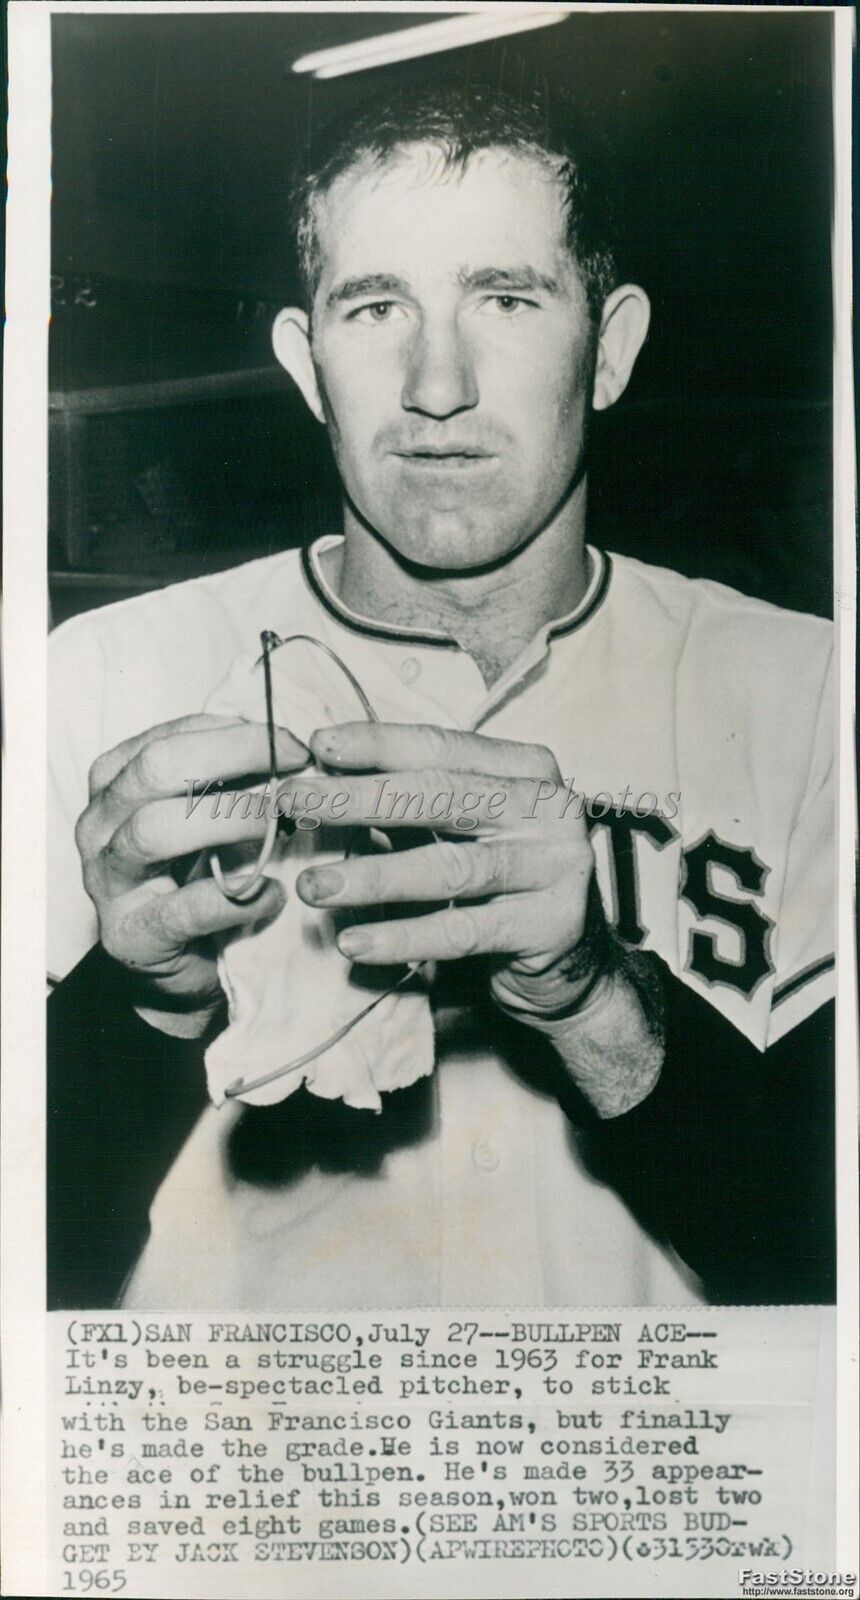 1965 Frank Linzy Pitcher San Francisco Giants Bullpen Ace Baseball Wirephoto 5X7